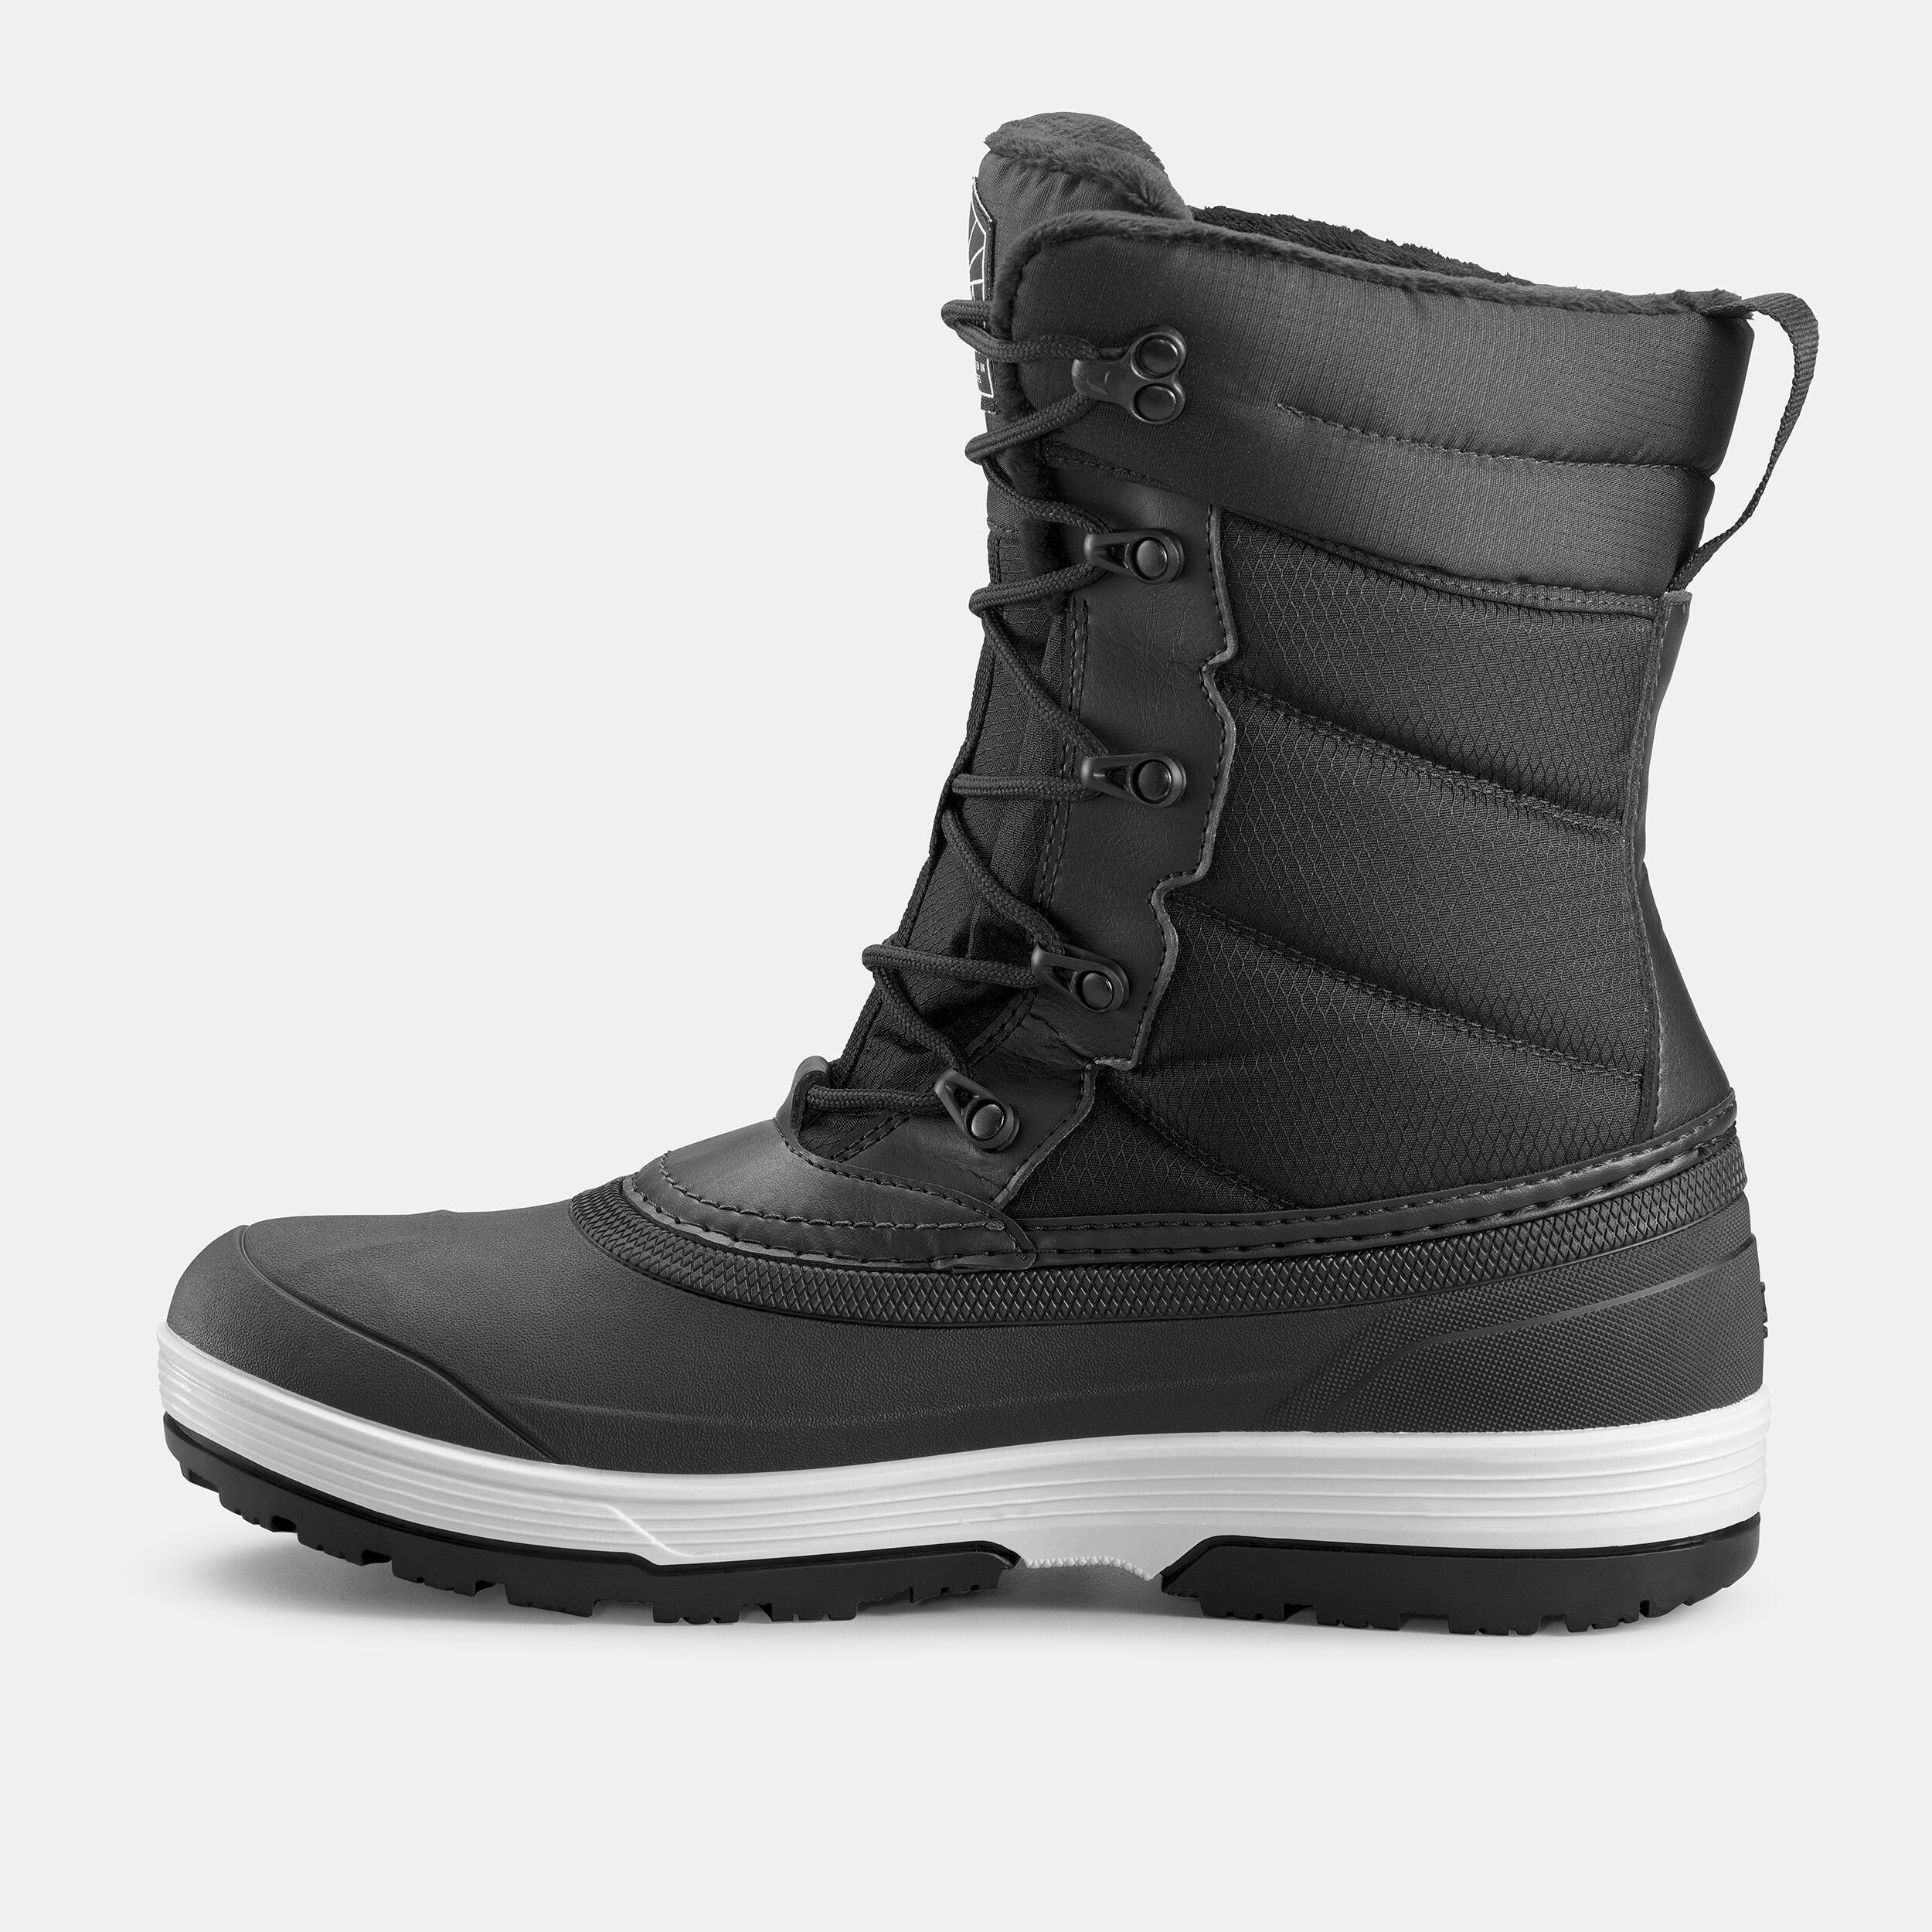 Warm Waterproof Snow Boots  - SH500 lace-up -  Men’s 5/8